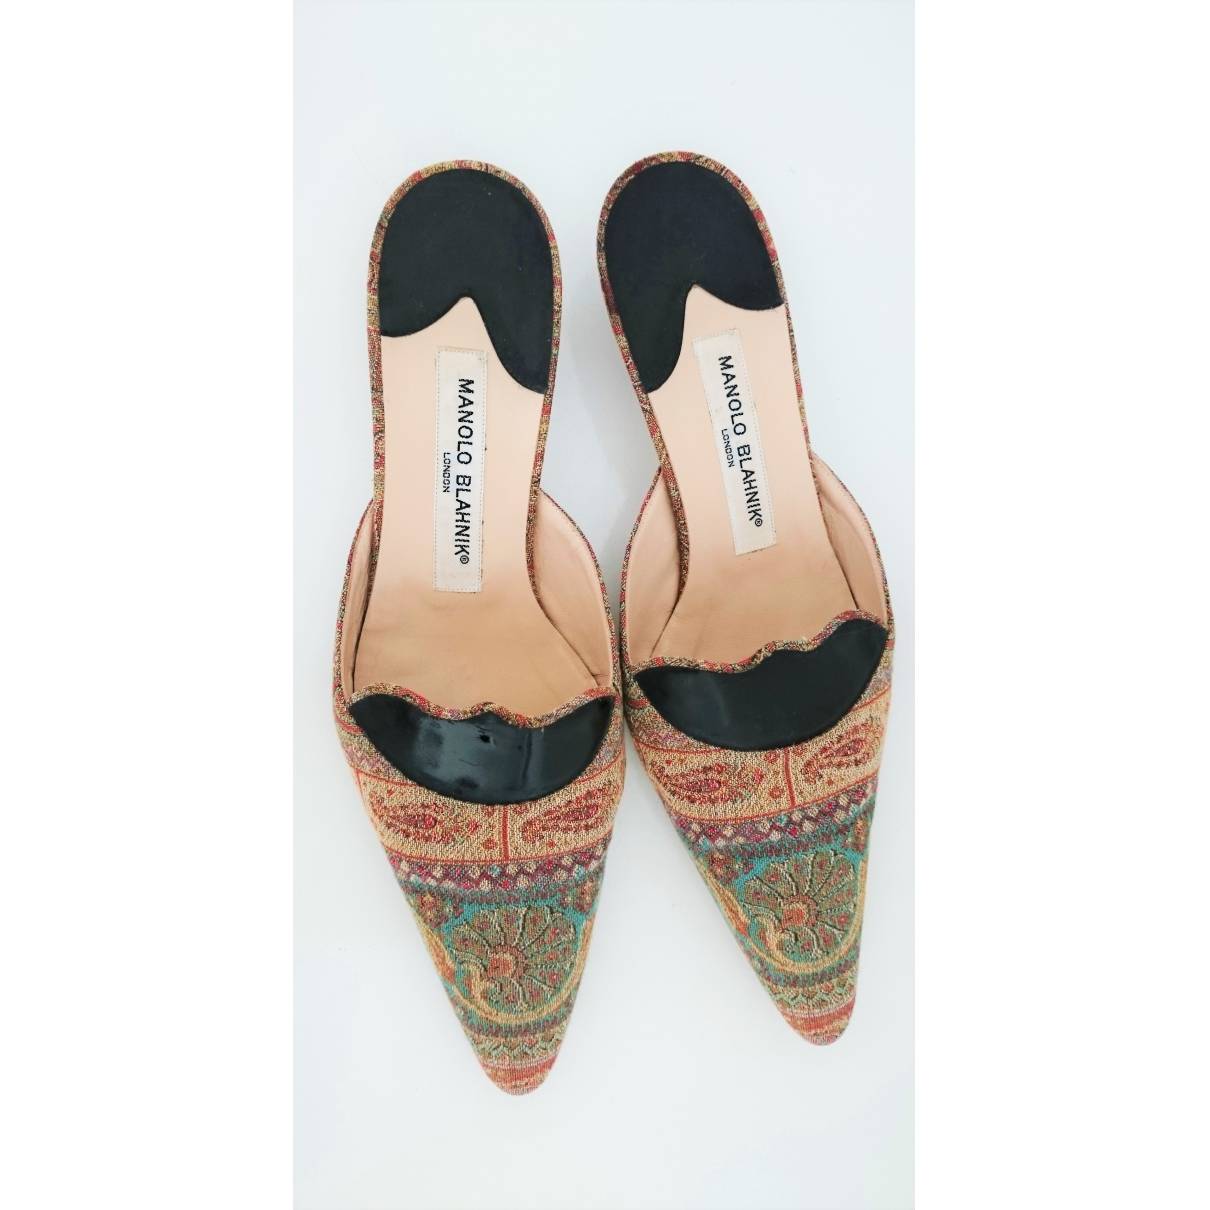 Buy Manolo Blahnik Maysale cloth sandals online